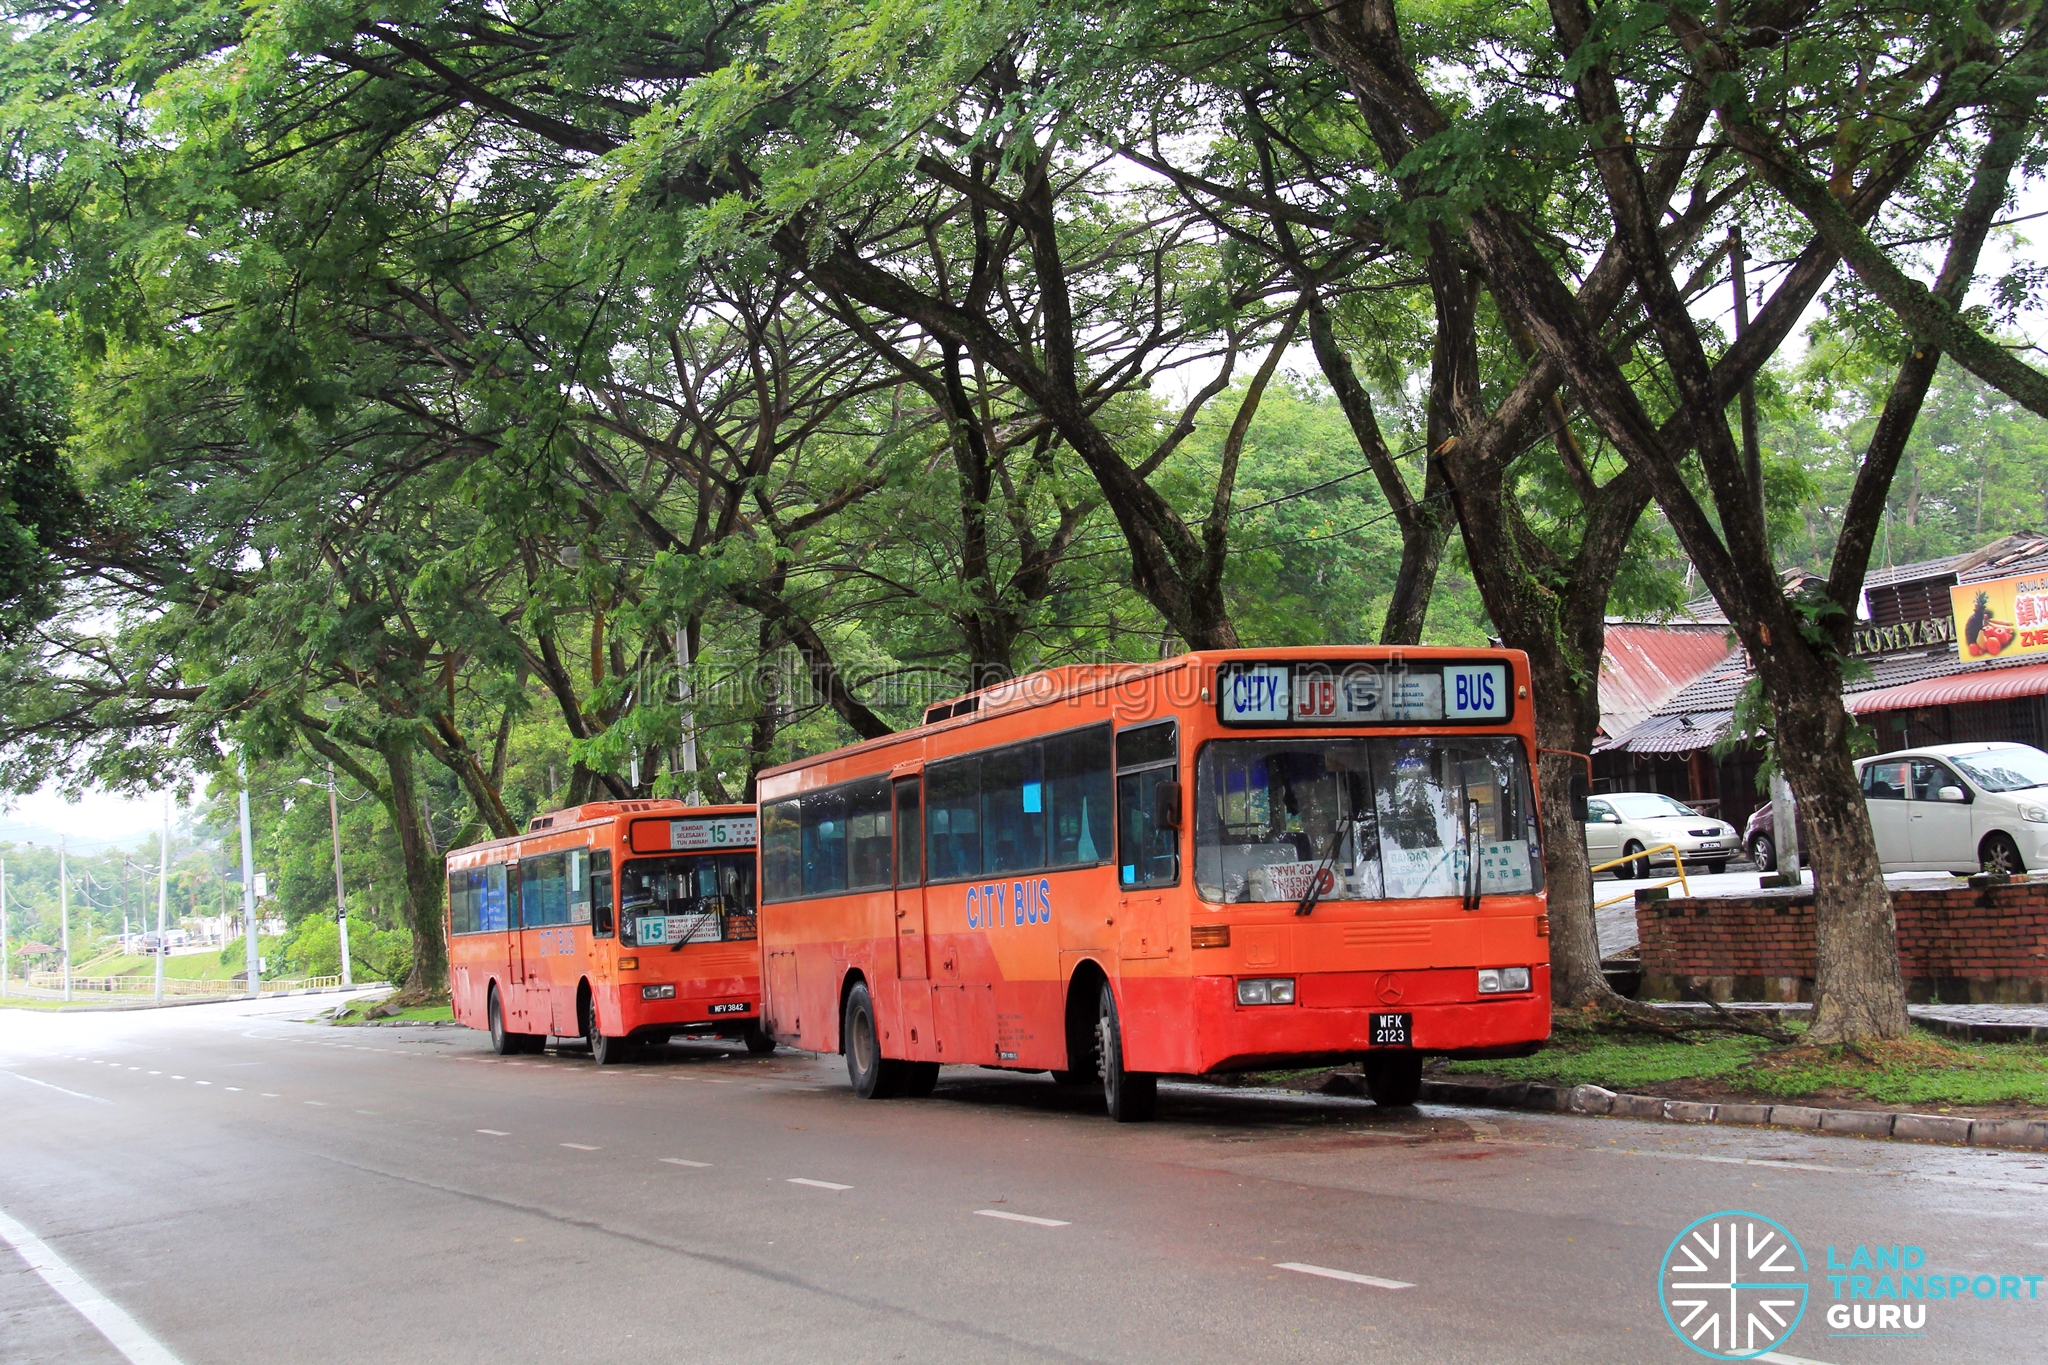 Selesa Jaya Roadside Terminal | Land Transport Guru